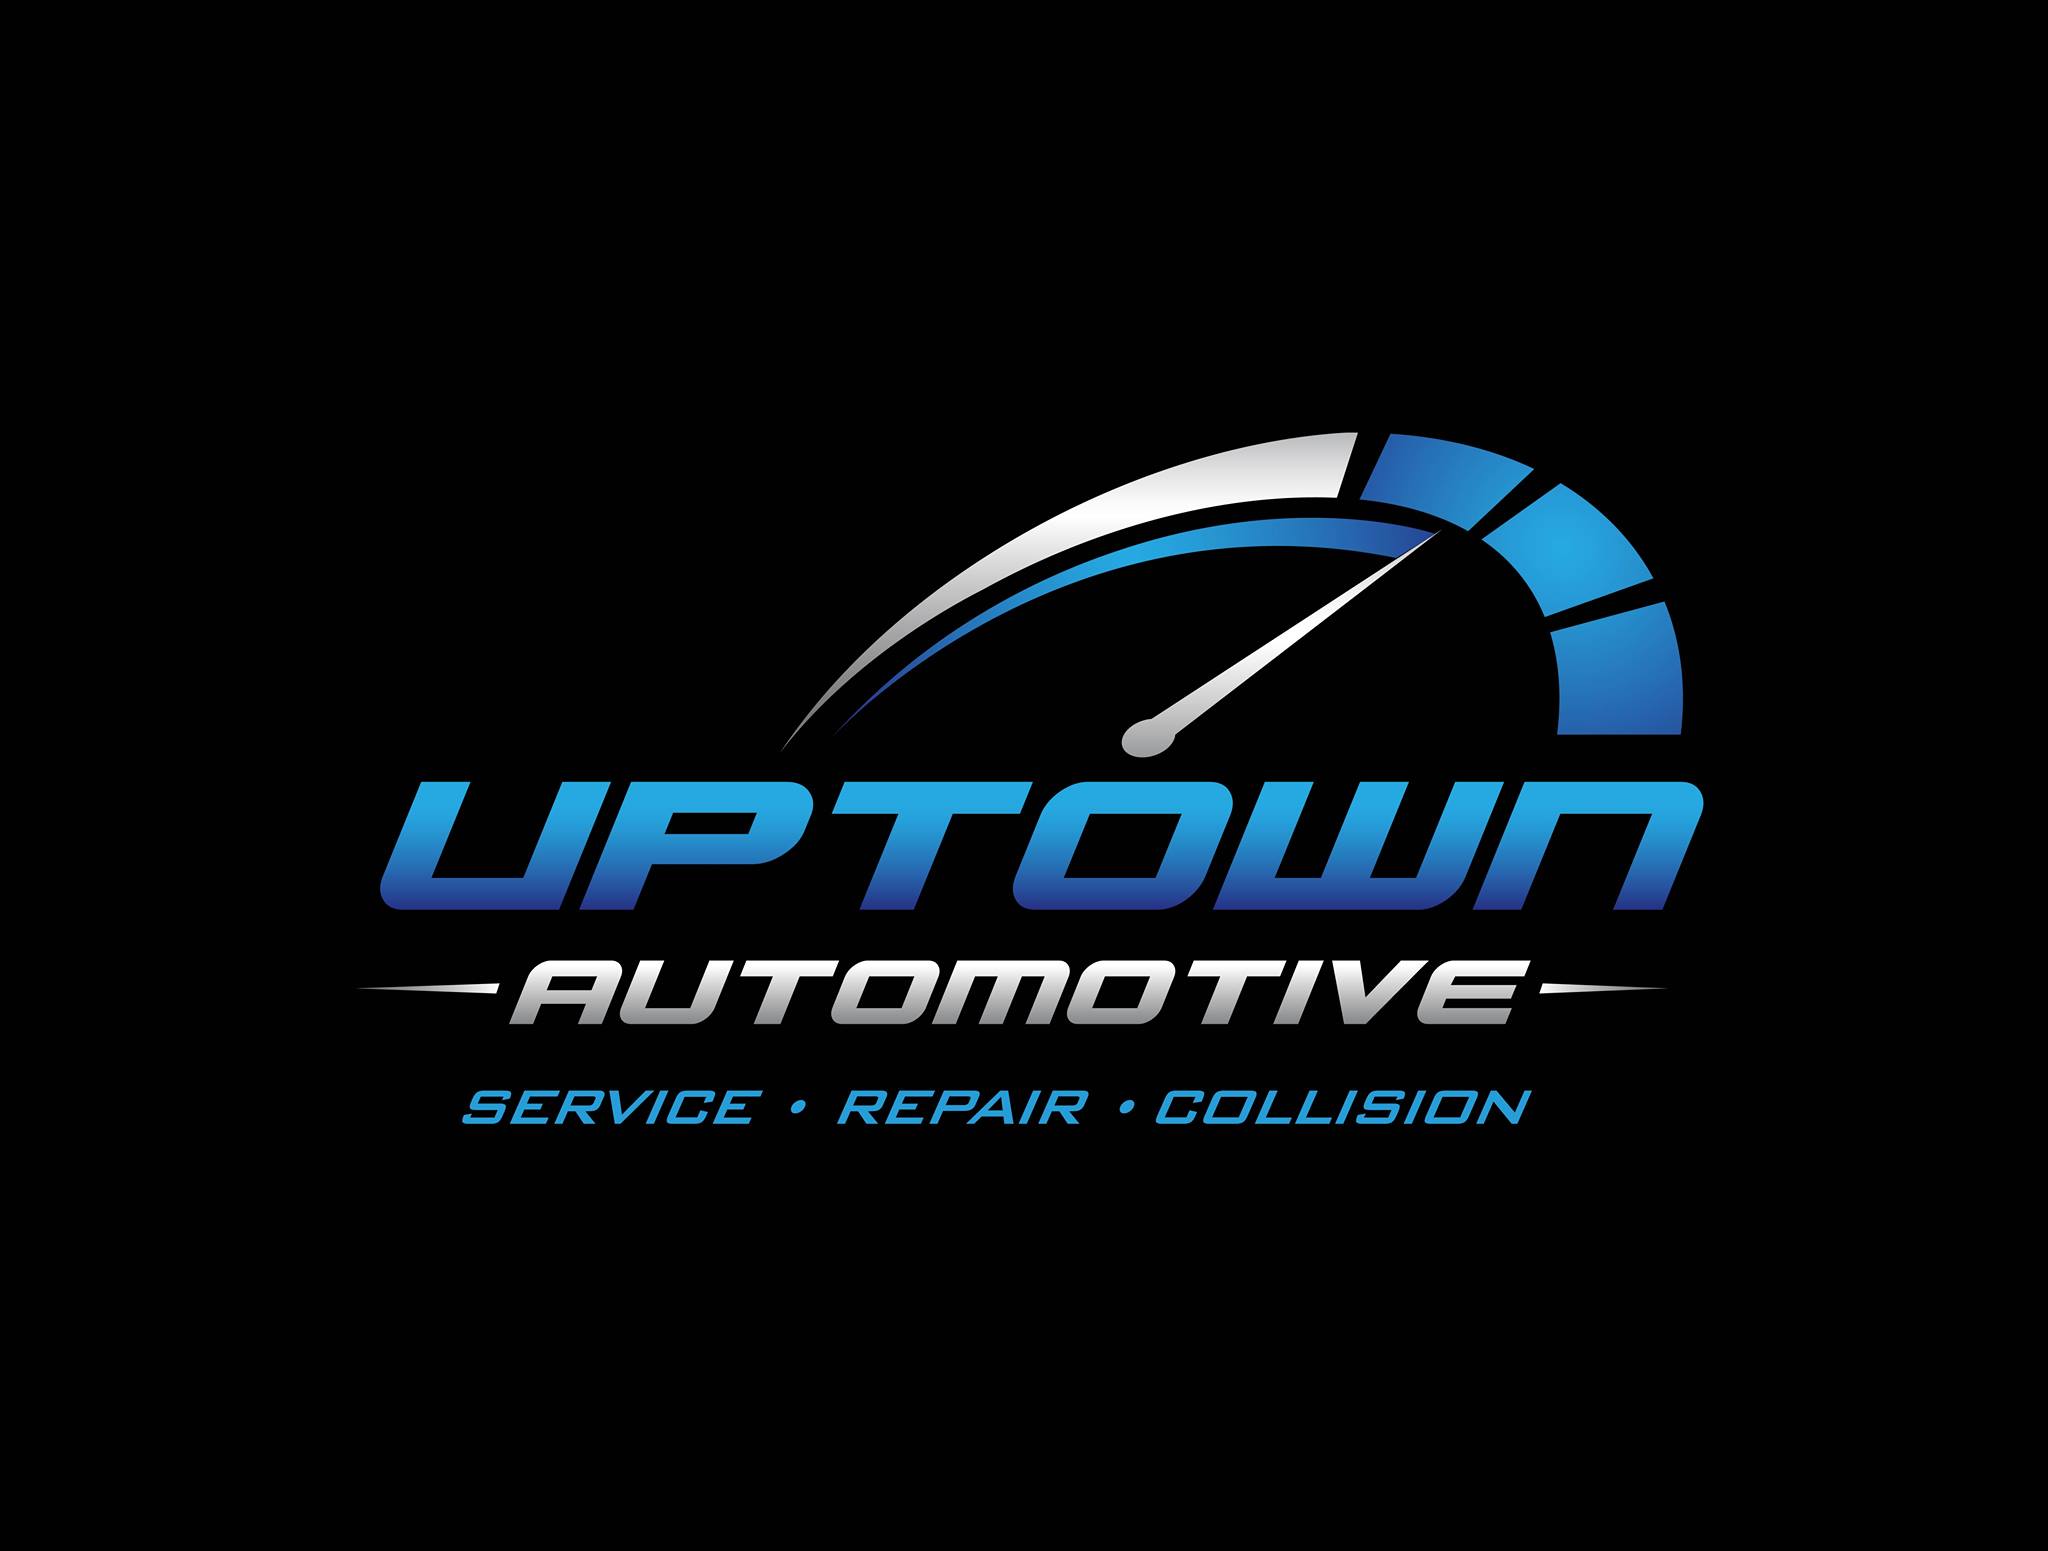 Uptown Automotive